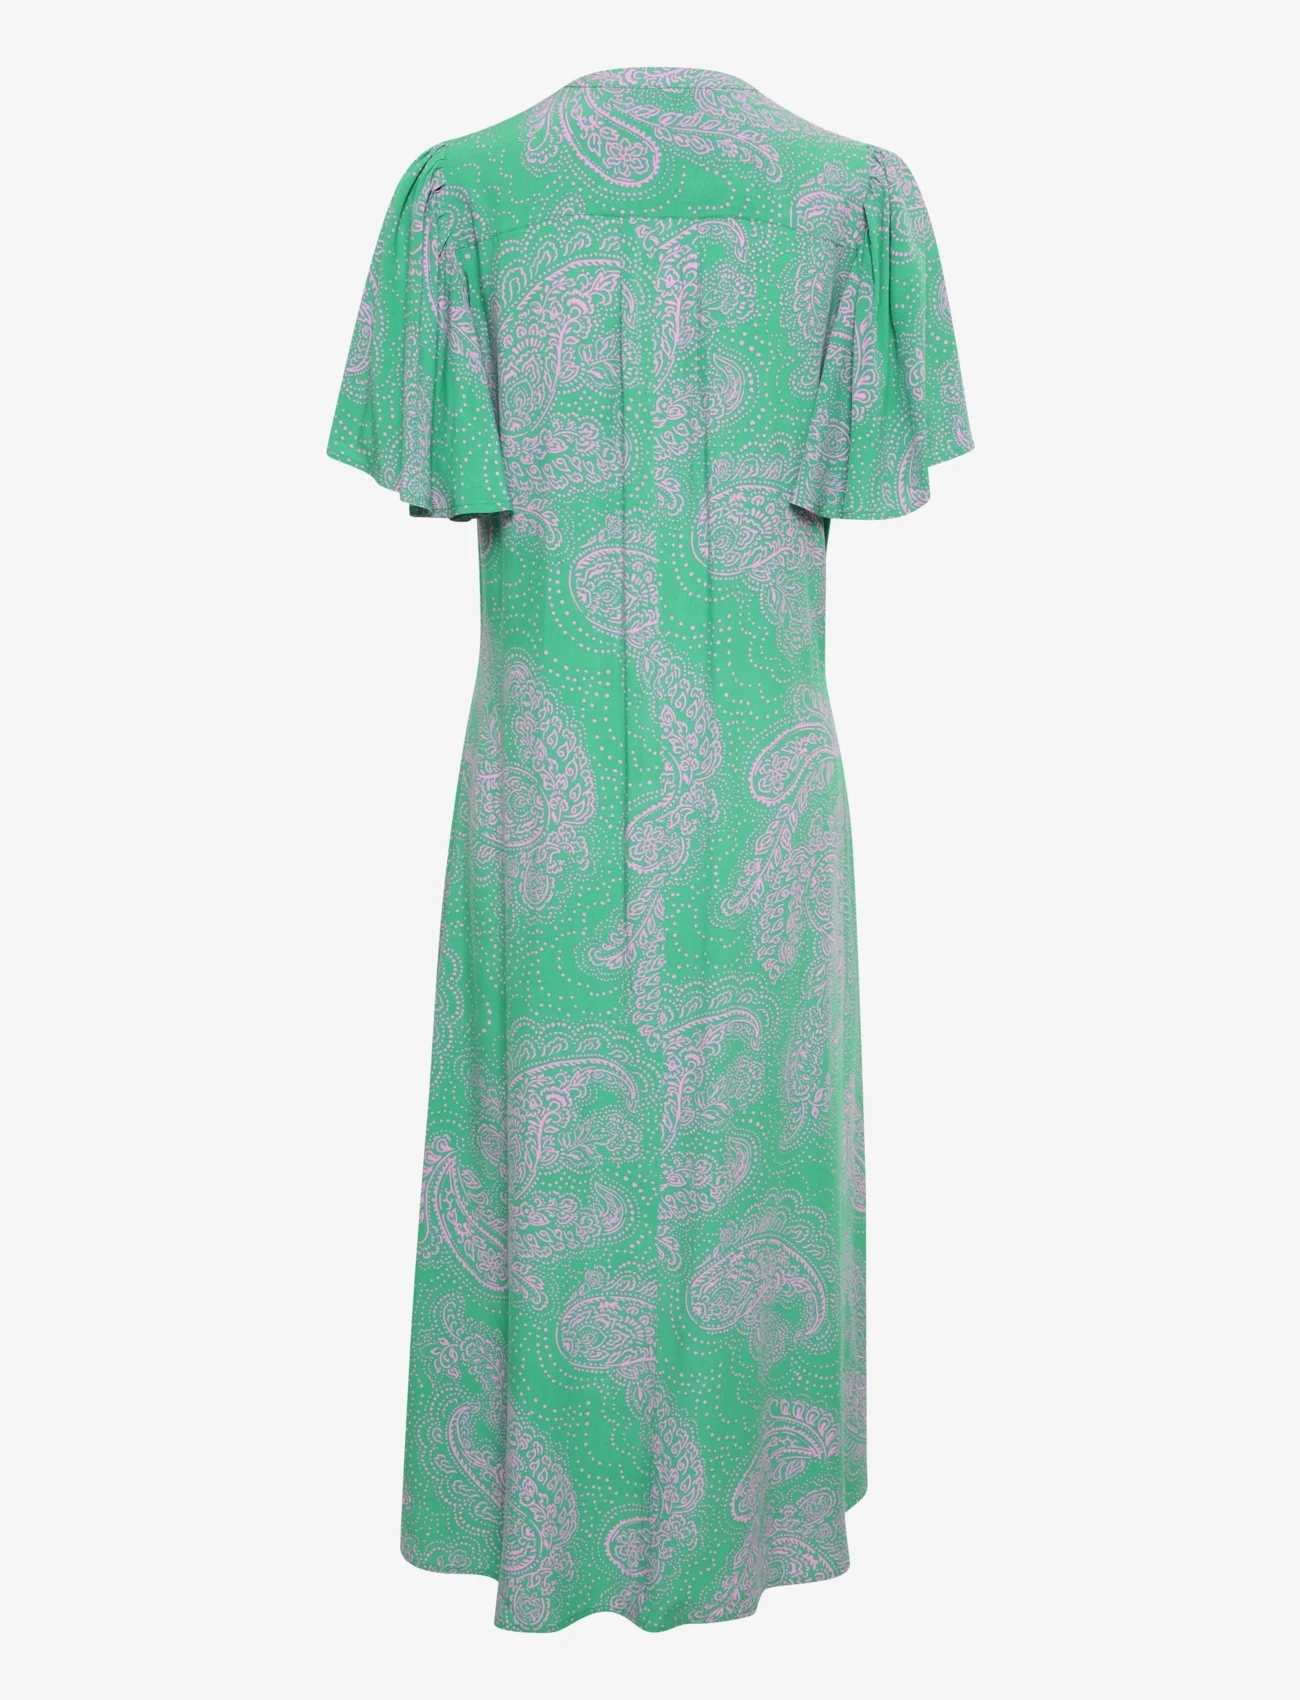 Culture - CUpolly Long Dress - vasarinės suknelės - green/pink paisley - 1